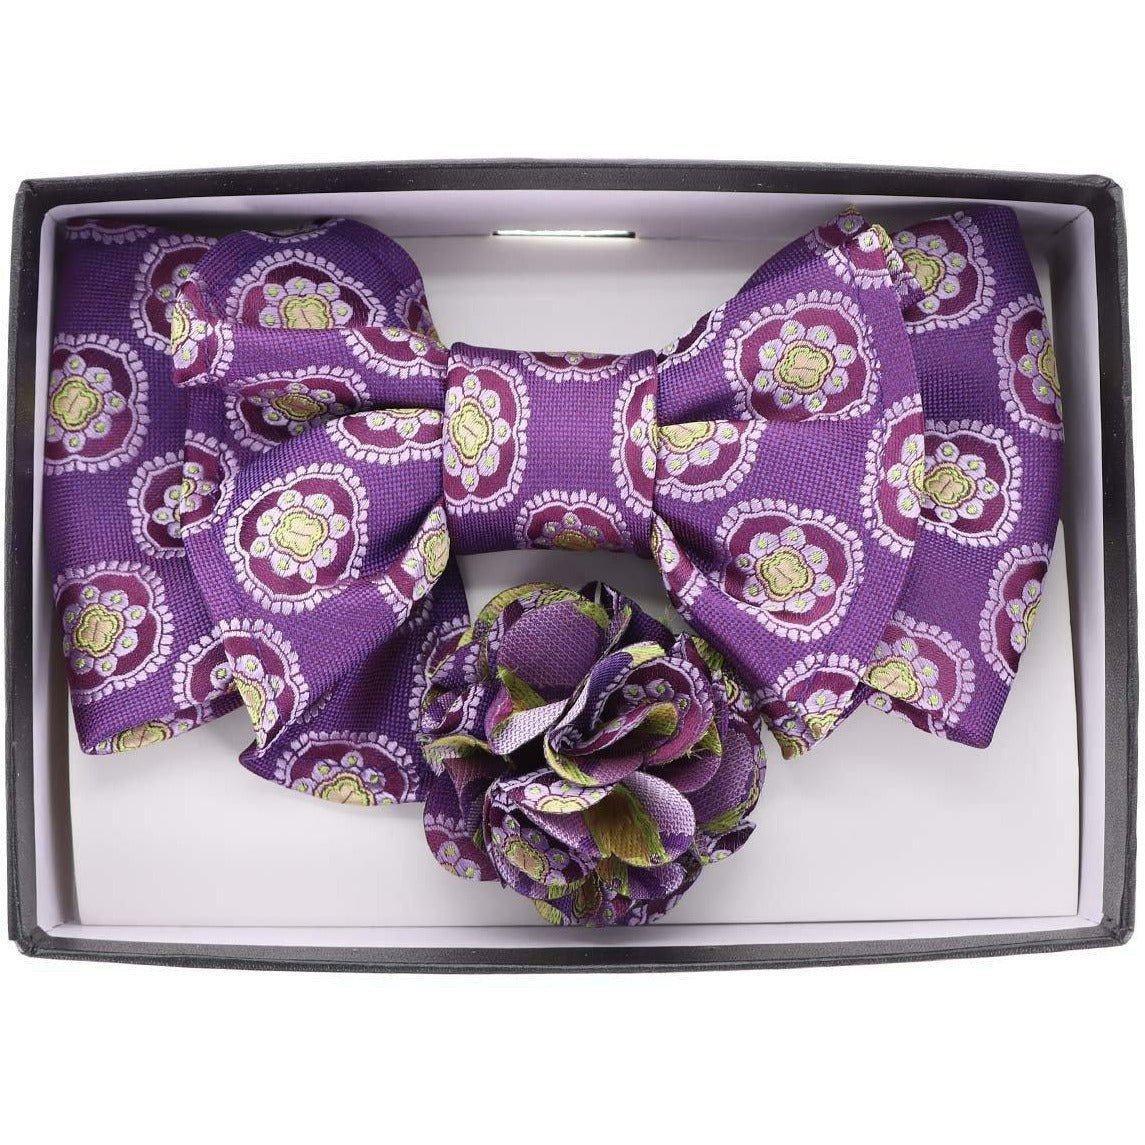 Vittorio Farina XL Bow Tie, Pocket Square &amp; Flower Lapel Pin - XL2120 - Classy Cufflinks